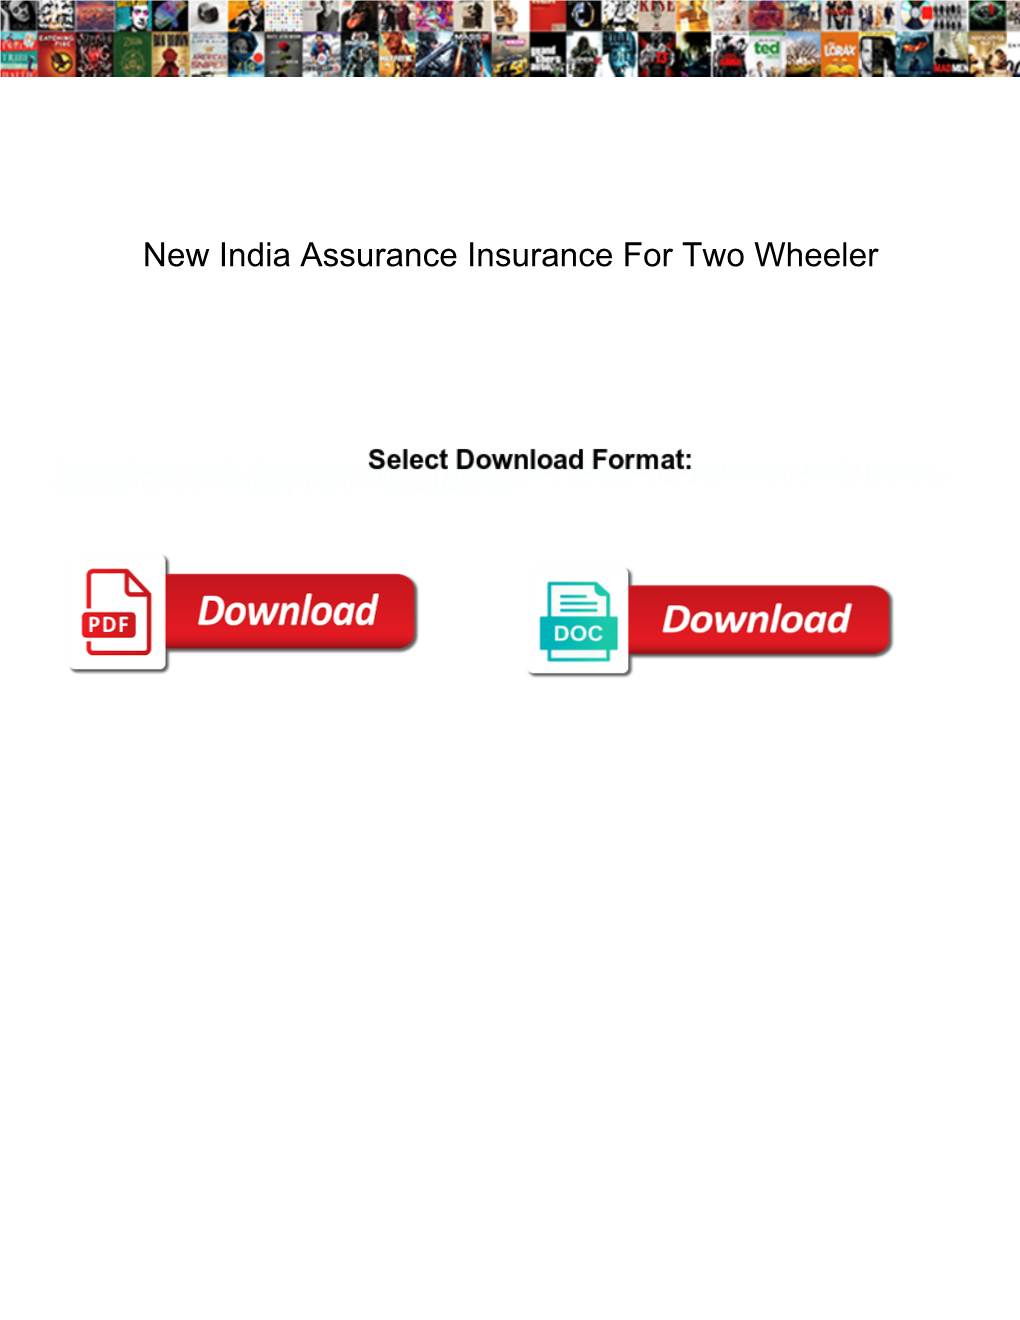 New India Assurance Insurance for Two Wheeler